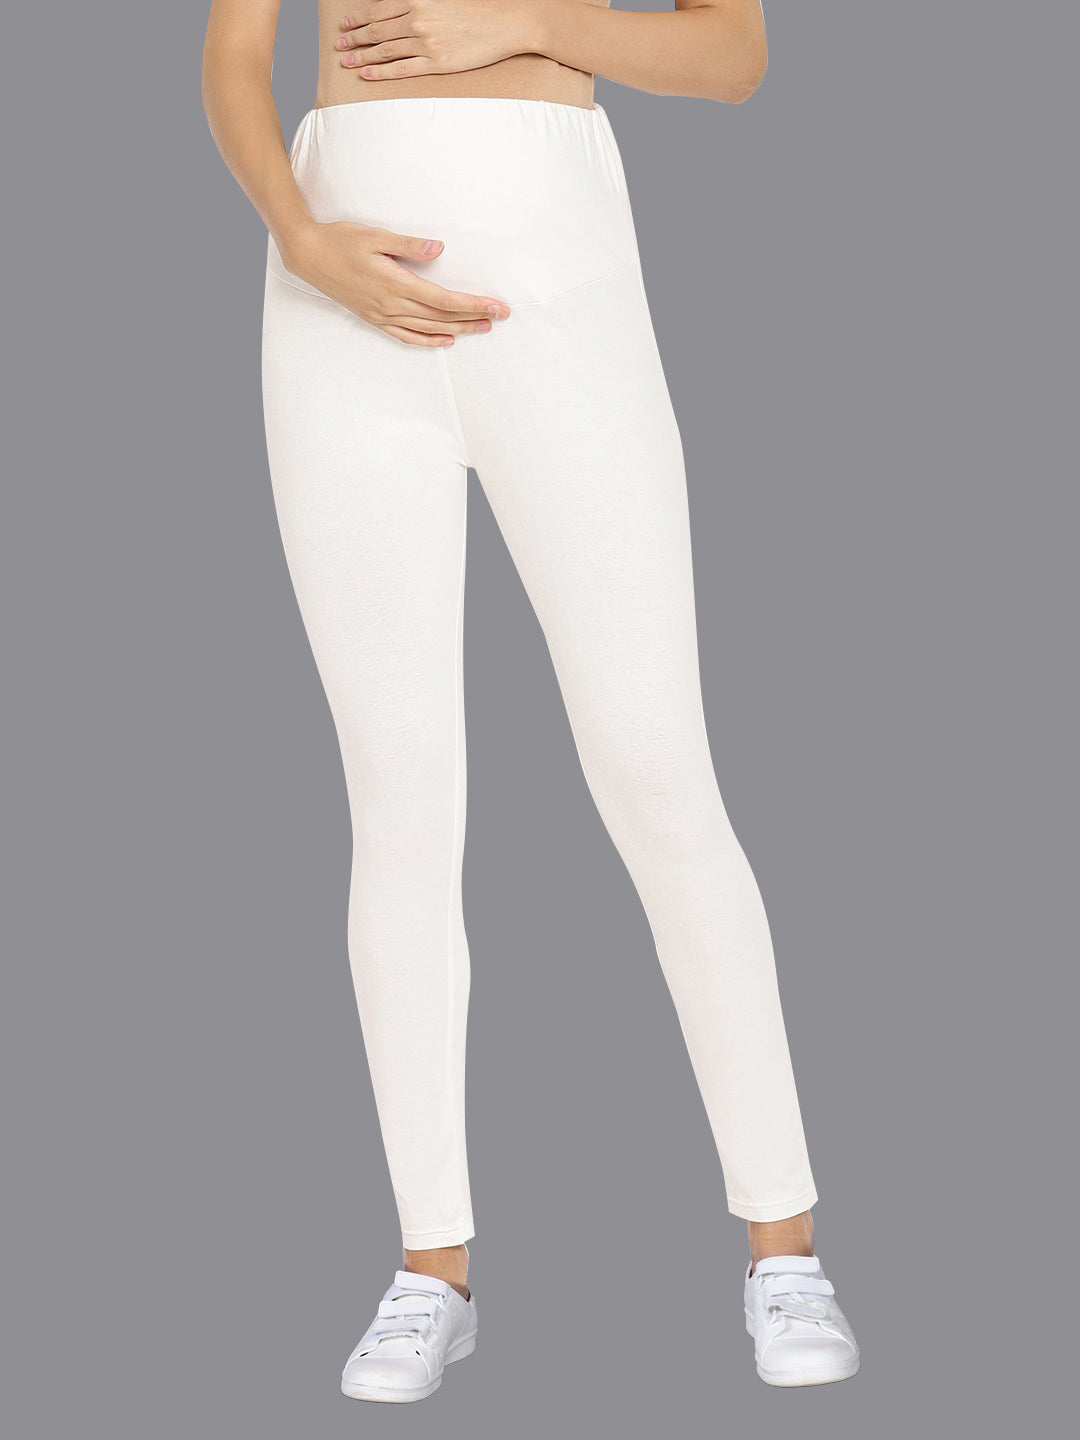 White Maternity Leggings & Pants